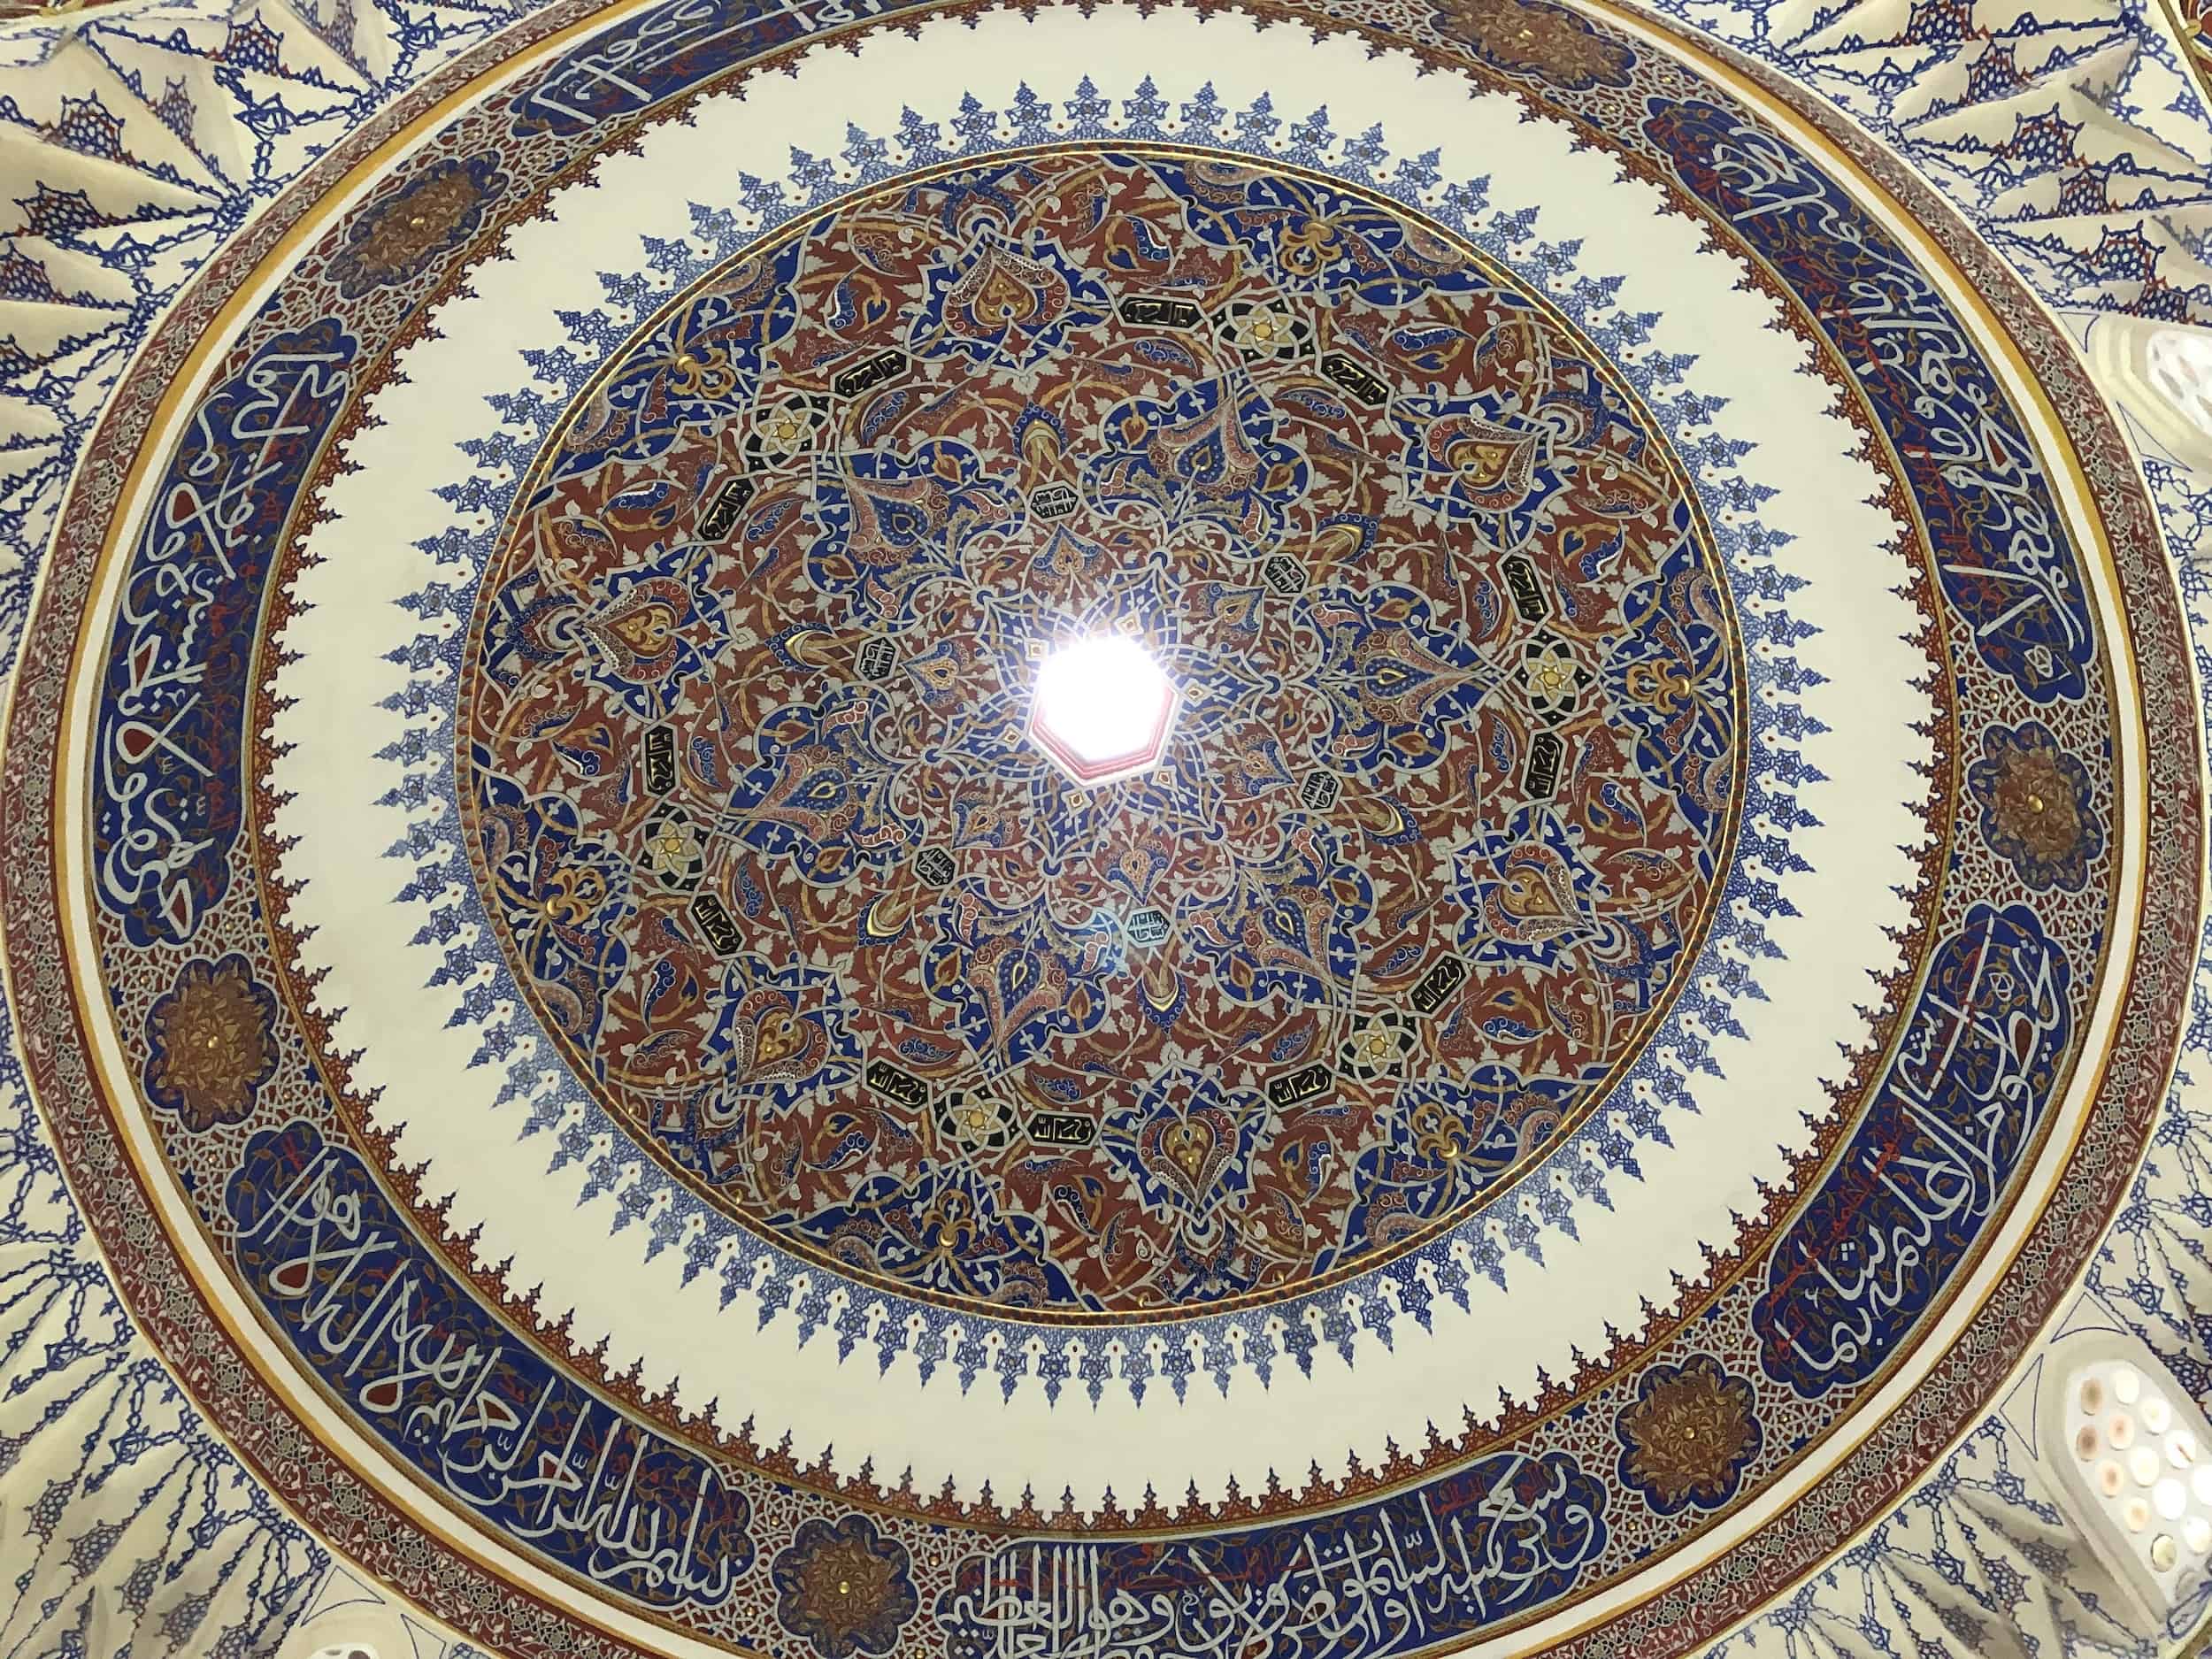 Dome of the tomb of Cem Sultan at the Muradiye Complex in Bursa, Turkey